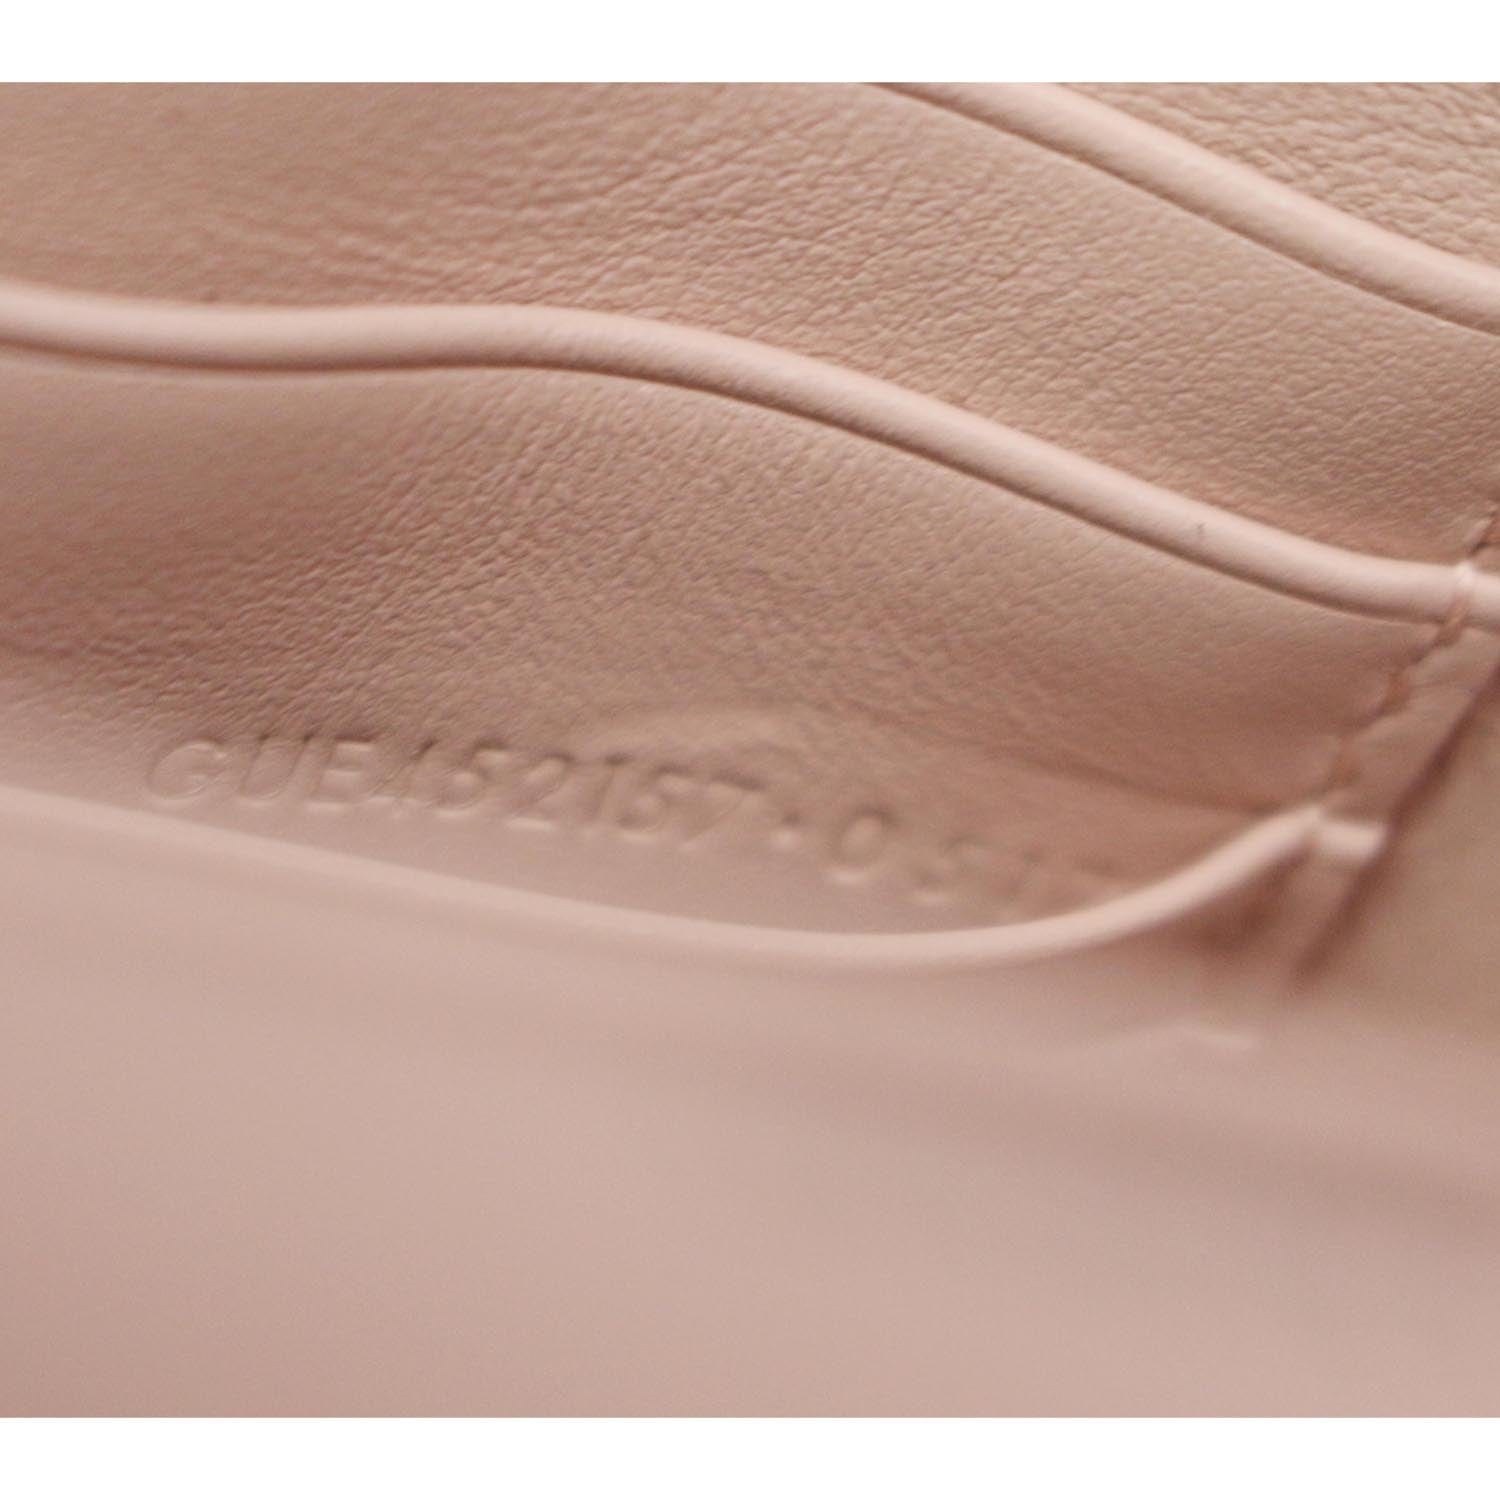 Saint Laurent - Authenticated Sunset Handbag - Leather Pink Plain for Women, Never Worn